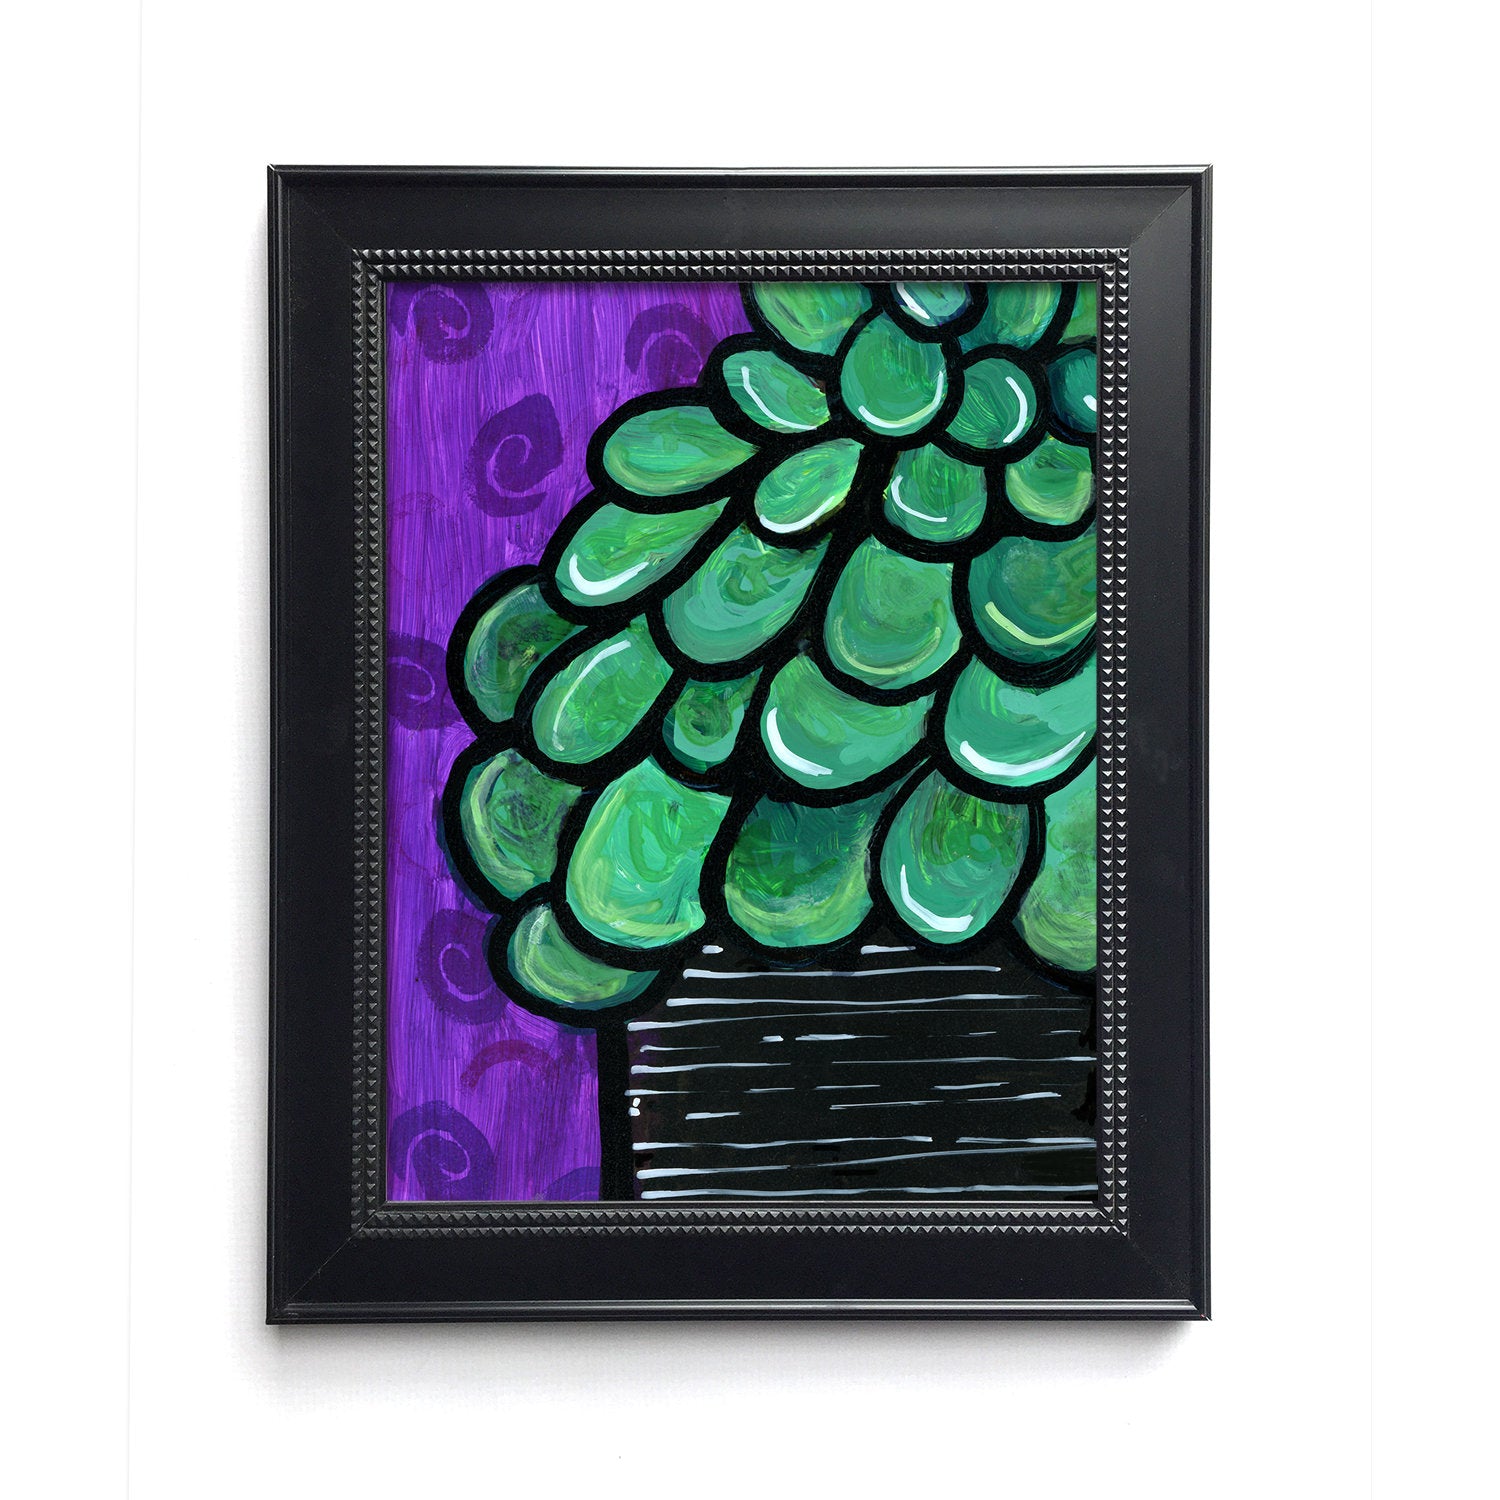 Jade Print - Succulent Art Print 